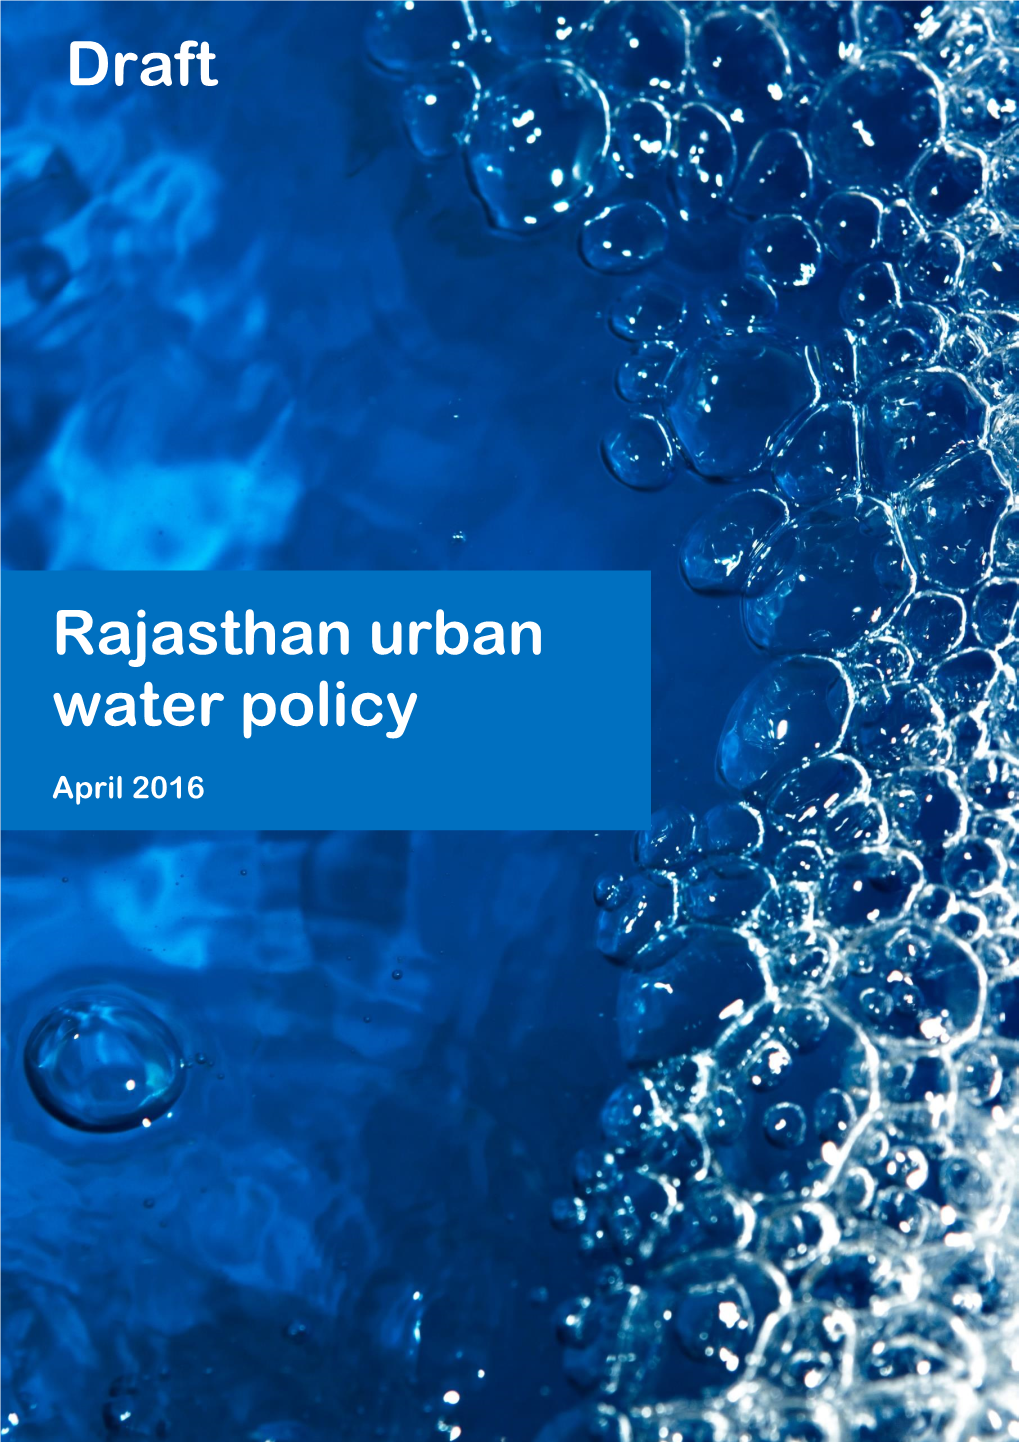 Rajasthan Urban Water Policy Draft